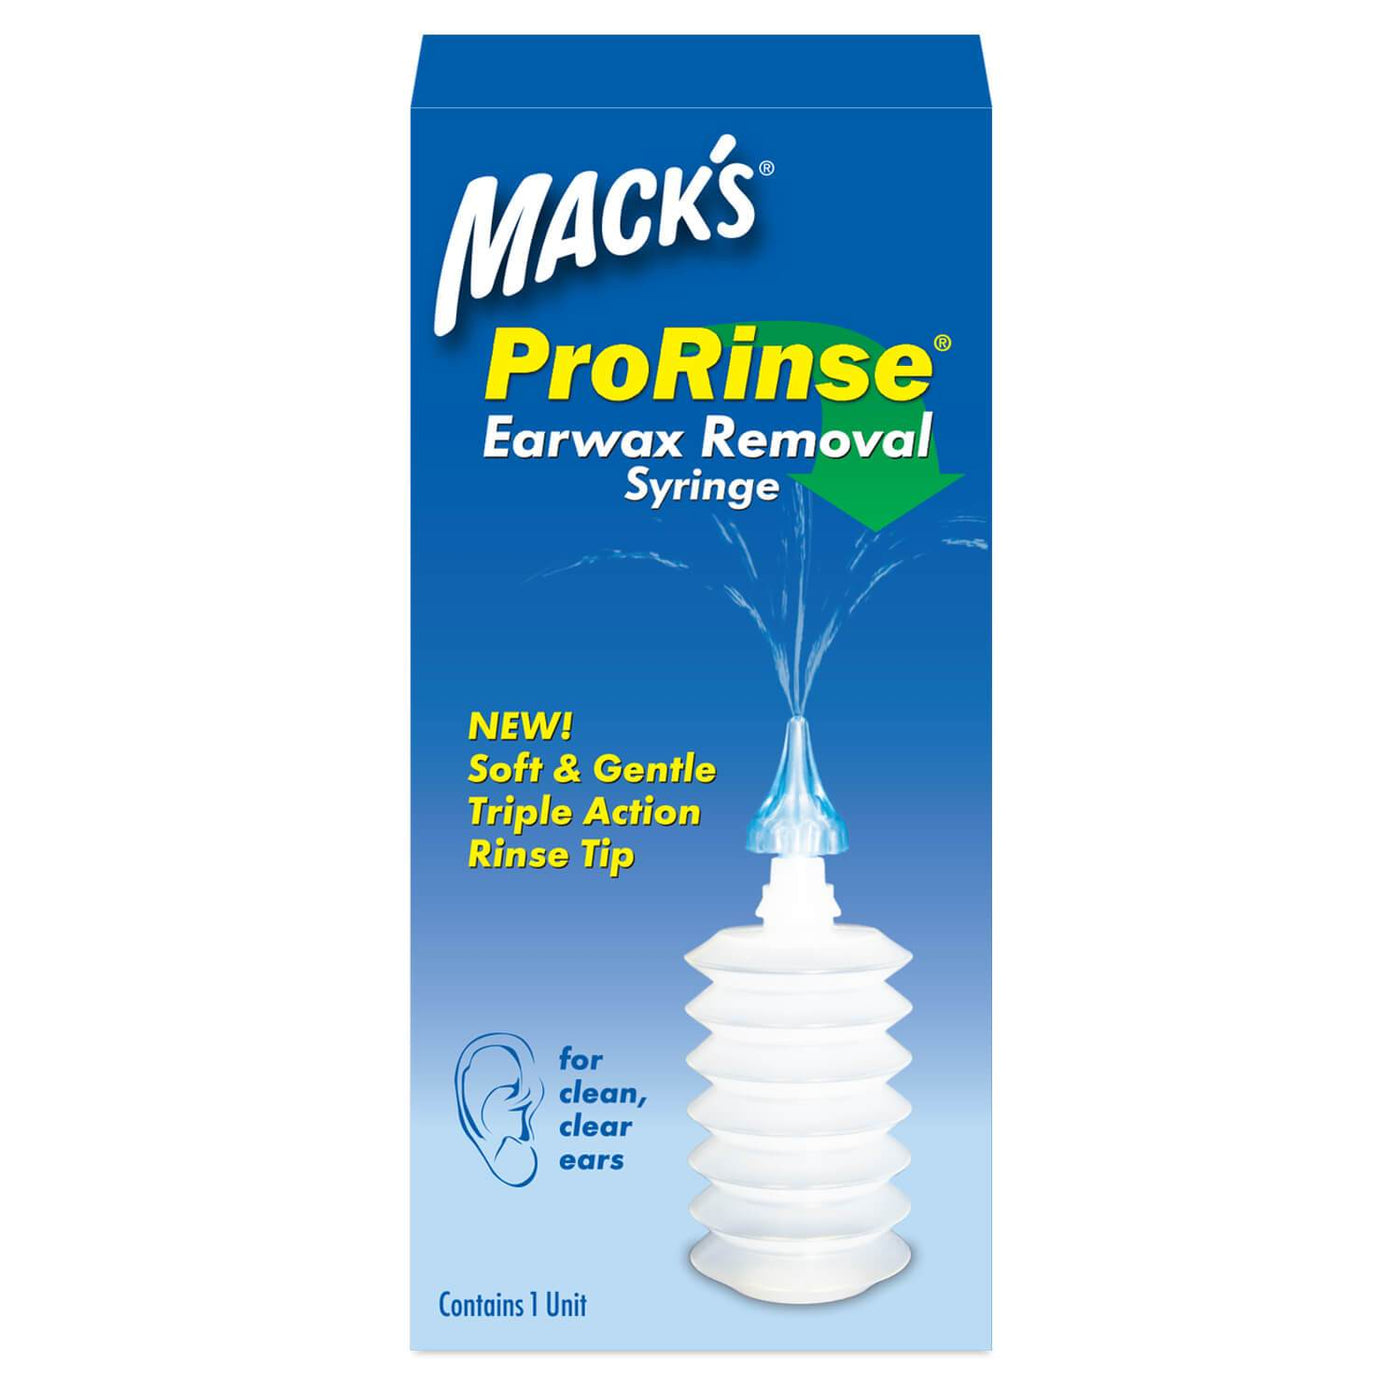 Macks ProRinse Earwax Removal Syringe